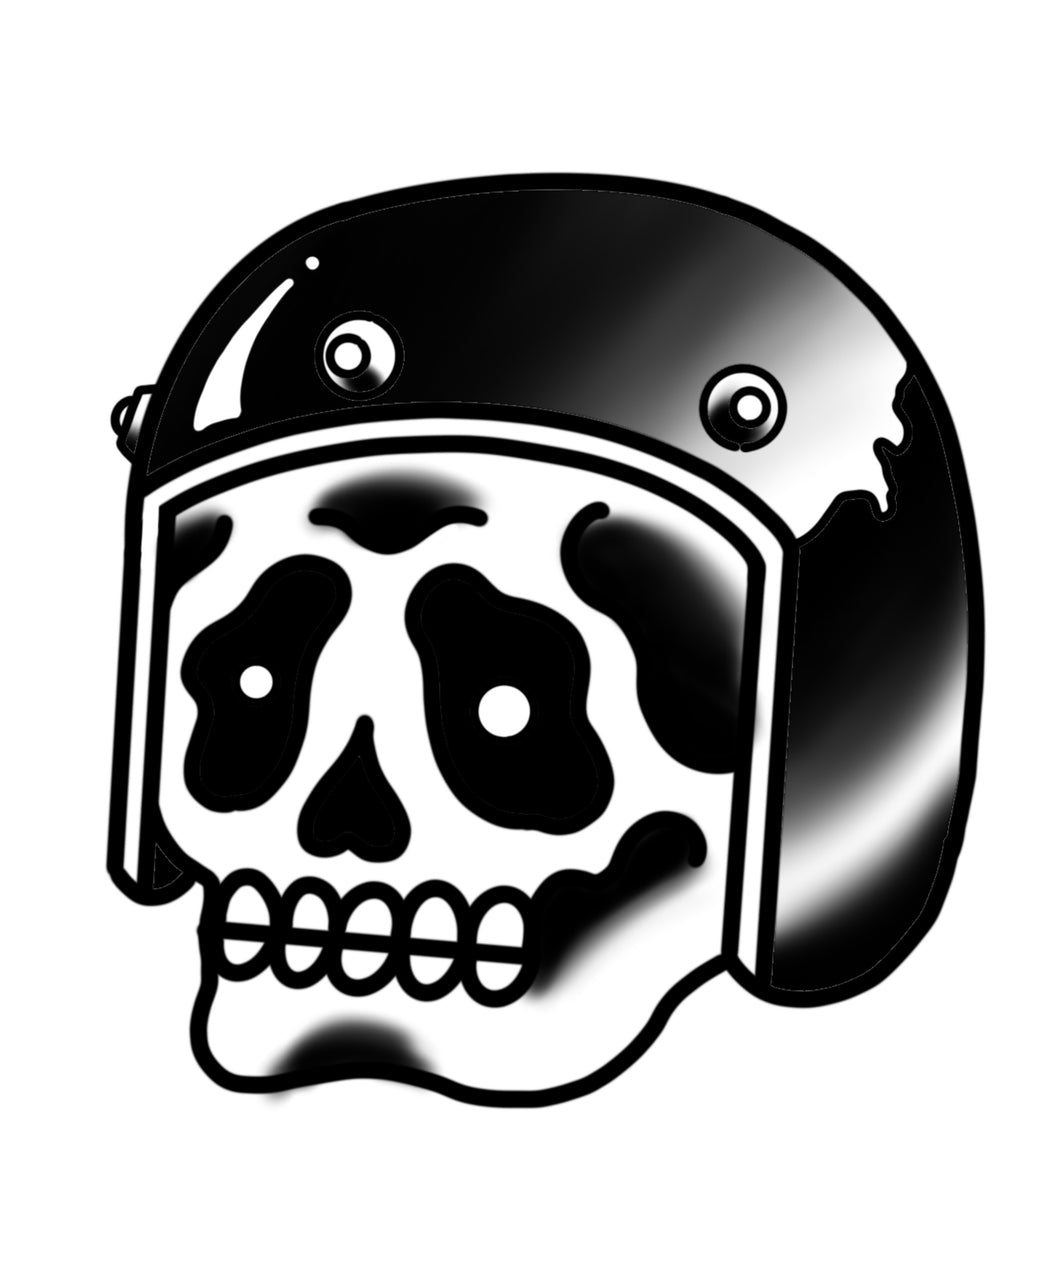 Skull Helmet by Zak (APPRENTICE)